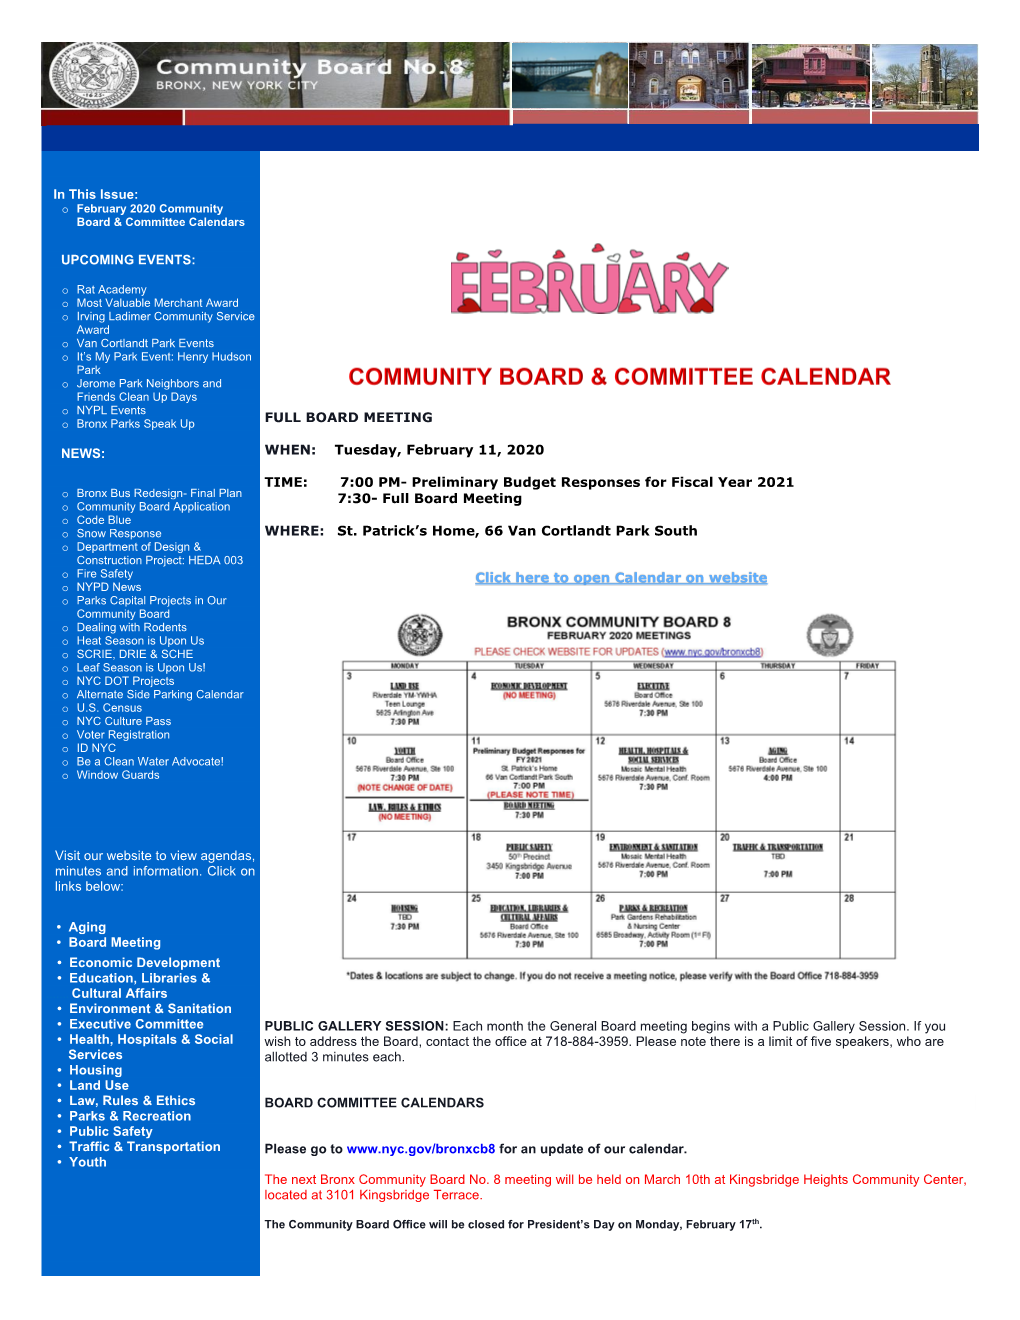 February 2020 Community Board & Committee Calendars